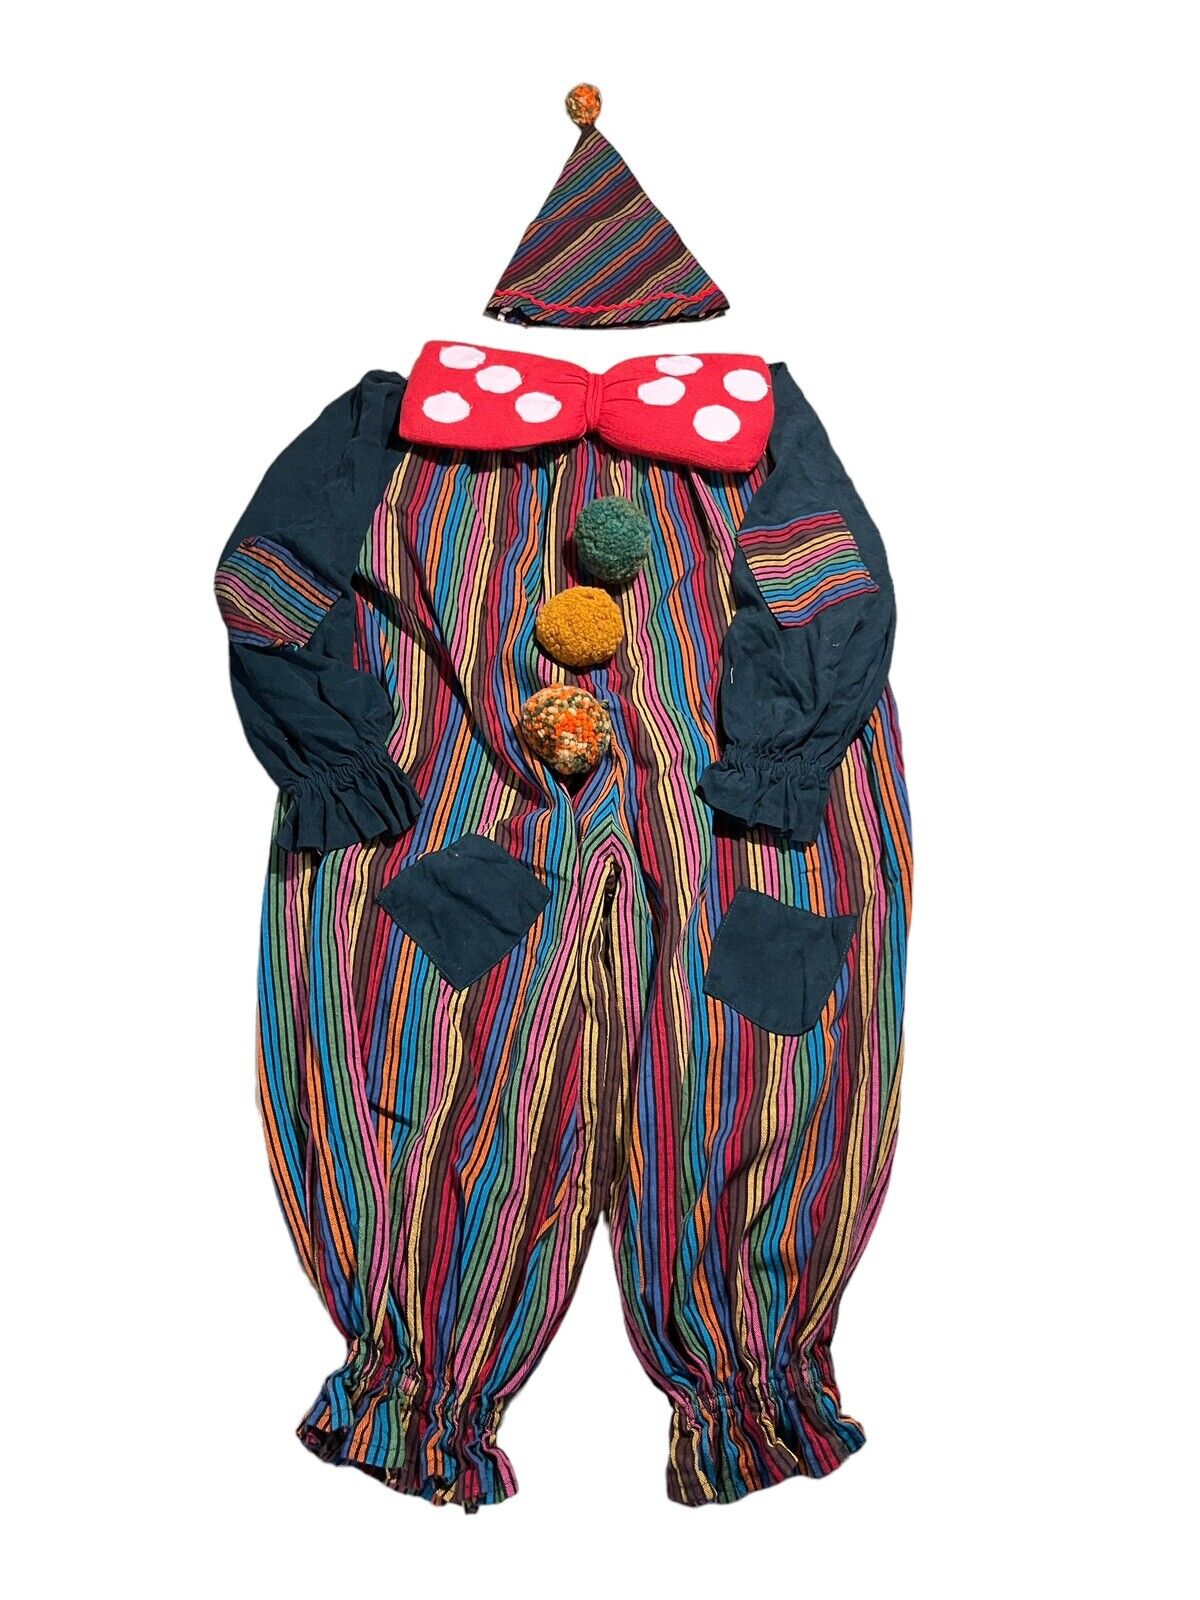 Vintage Handmade Clown Costume Halloween Kids Girls Boys 3 Pc Hat Bow Tie